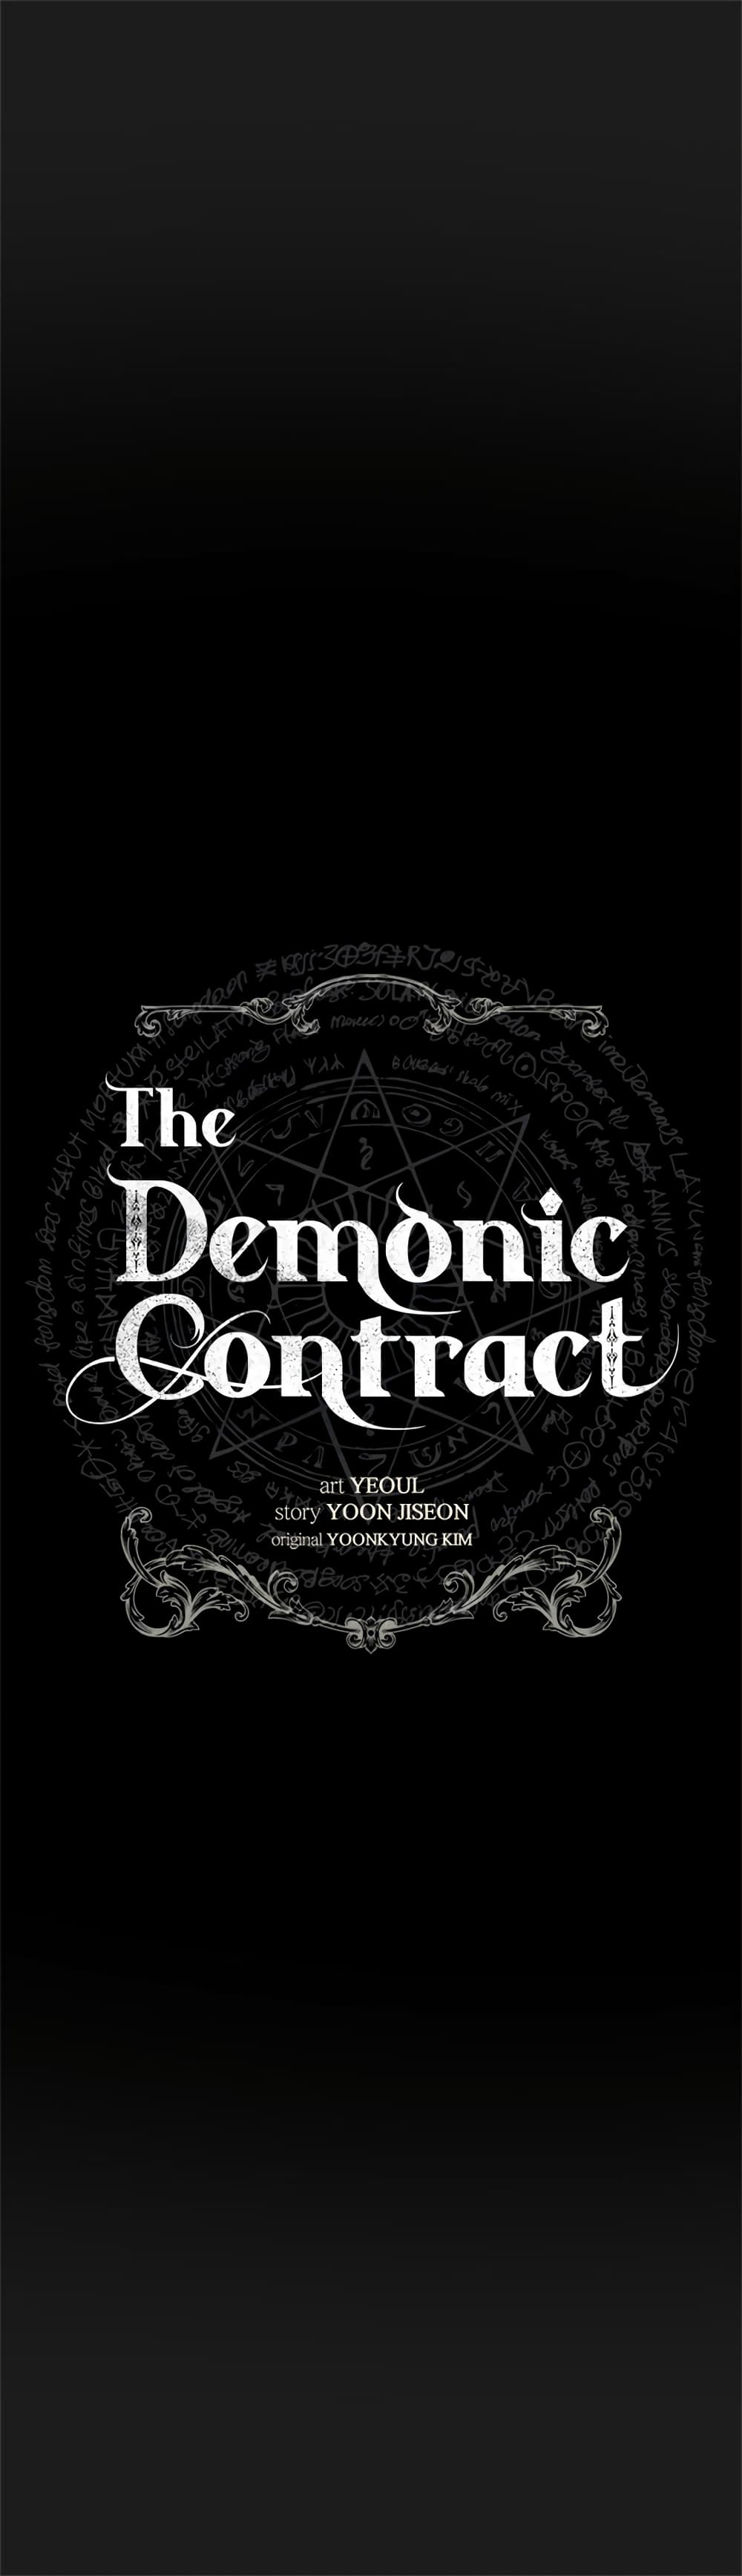 The Demonic Contract 38 11